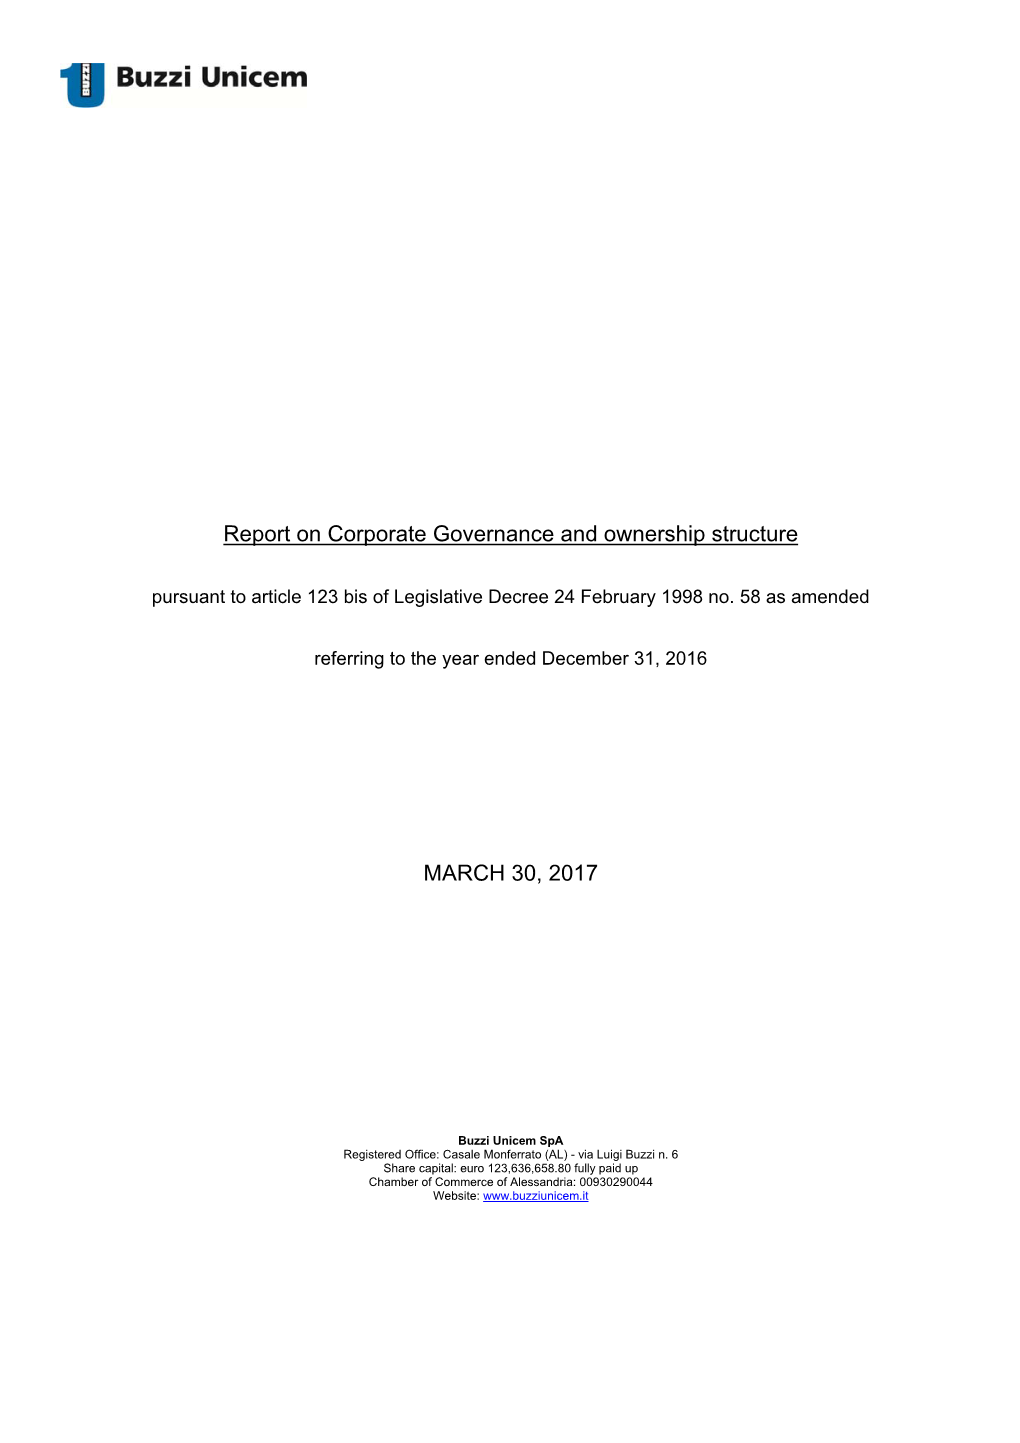 Report on Corporate Governance 2016